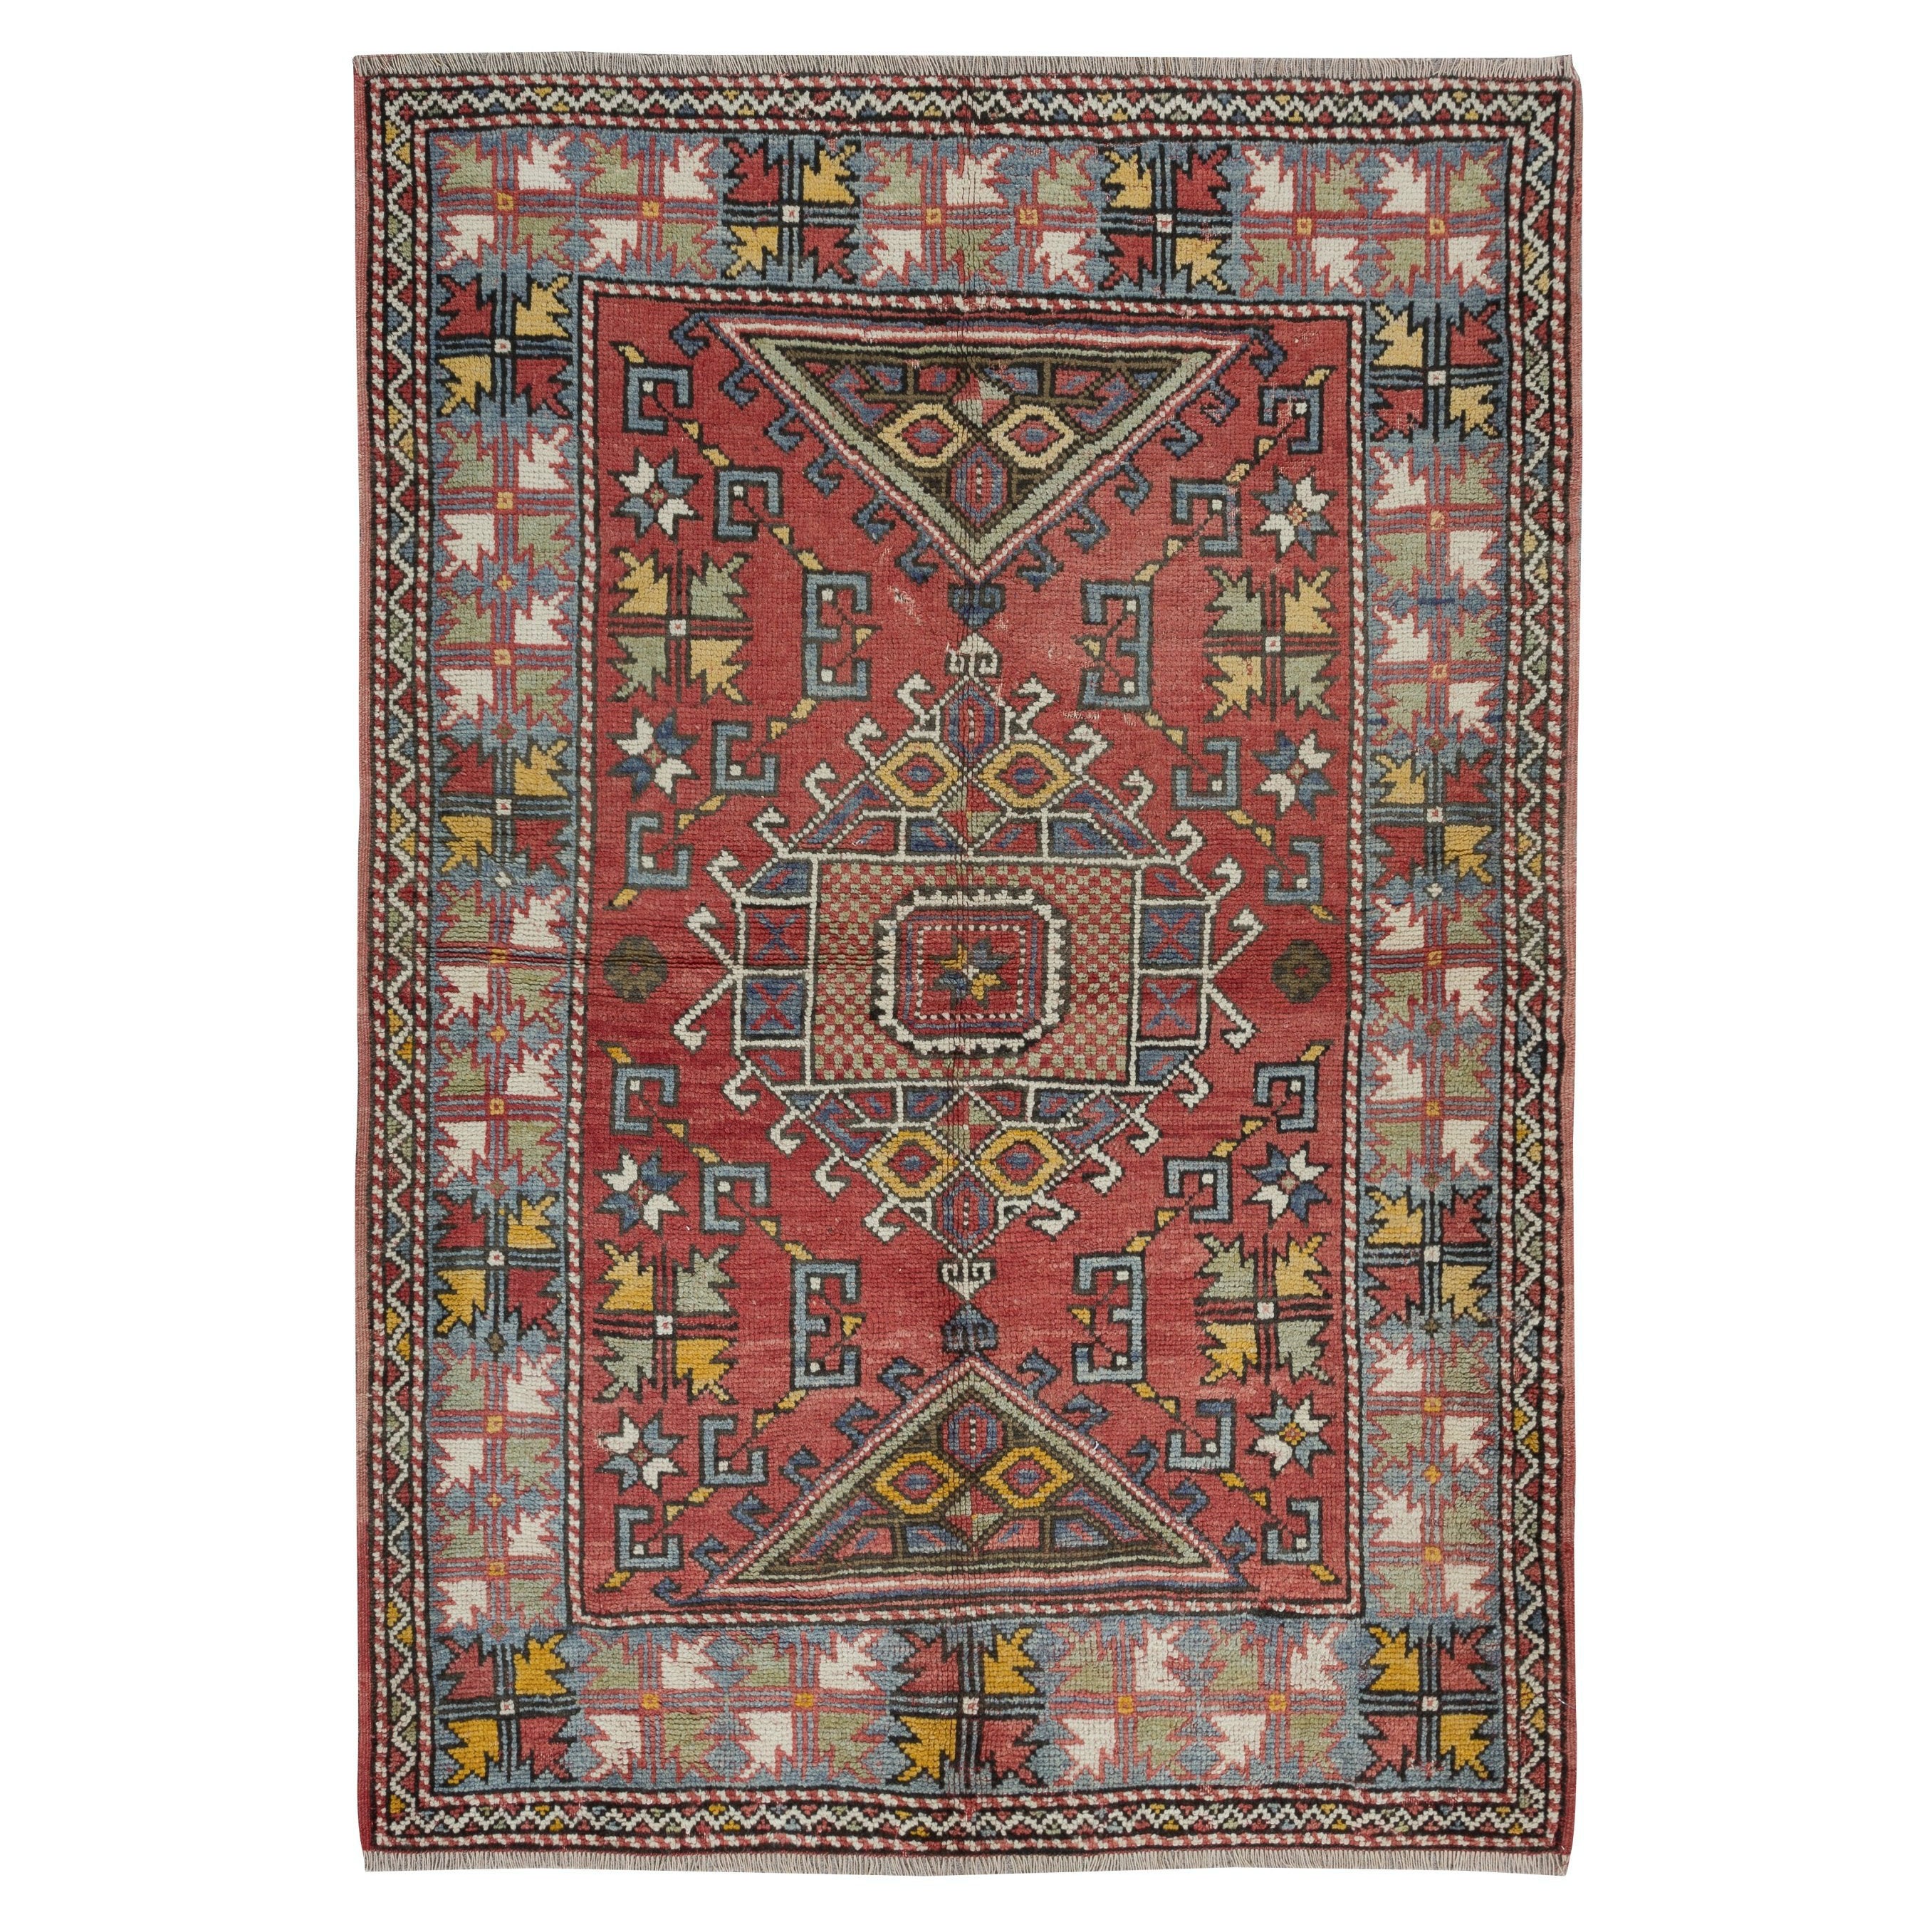 4x5.8 Ft Handmade Geometric Medallion Design Rug, Vintage Turkish Red Carpet For Sale